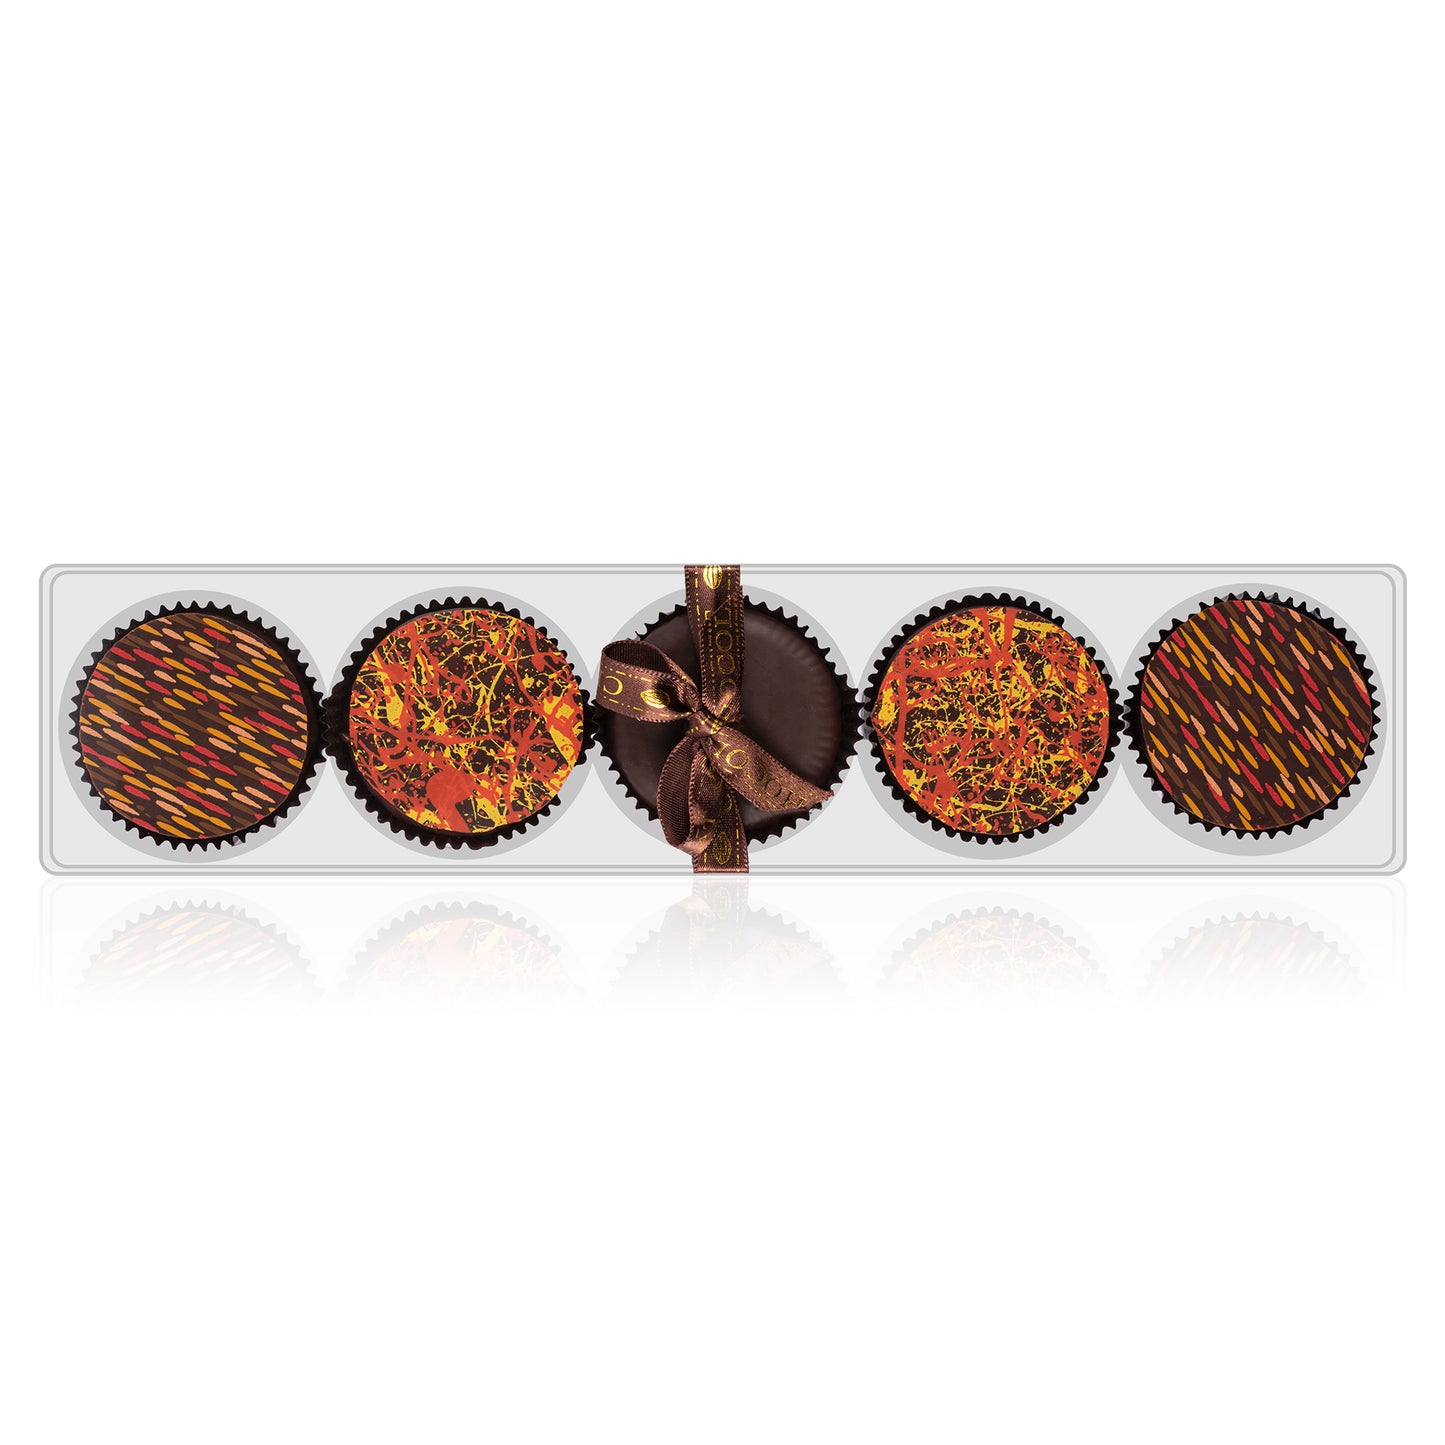 Chocolate Gift Basket - Truffles, Orange slices, Cookies, Bar, Mendiants